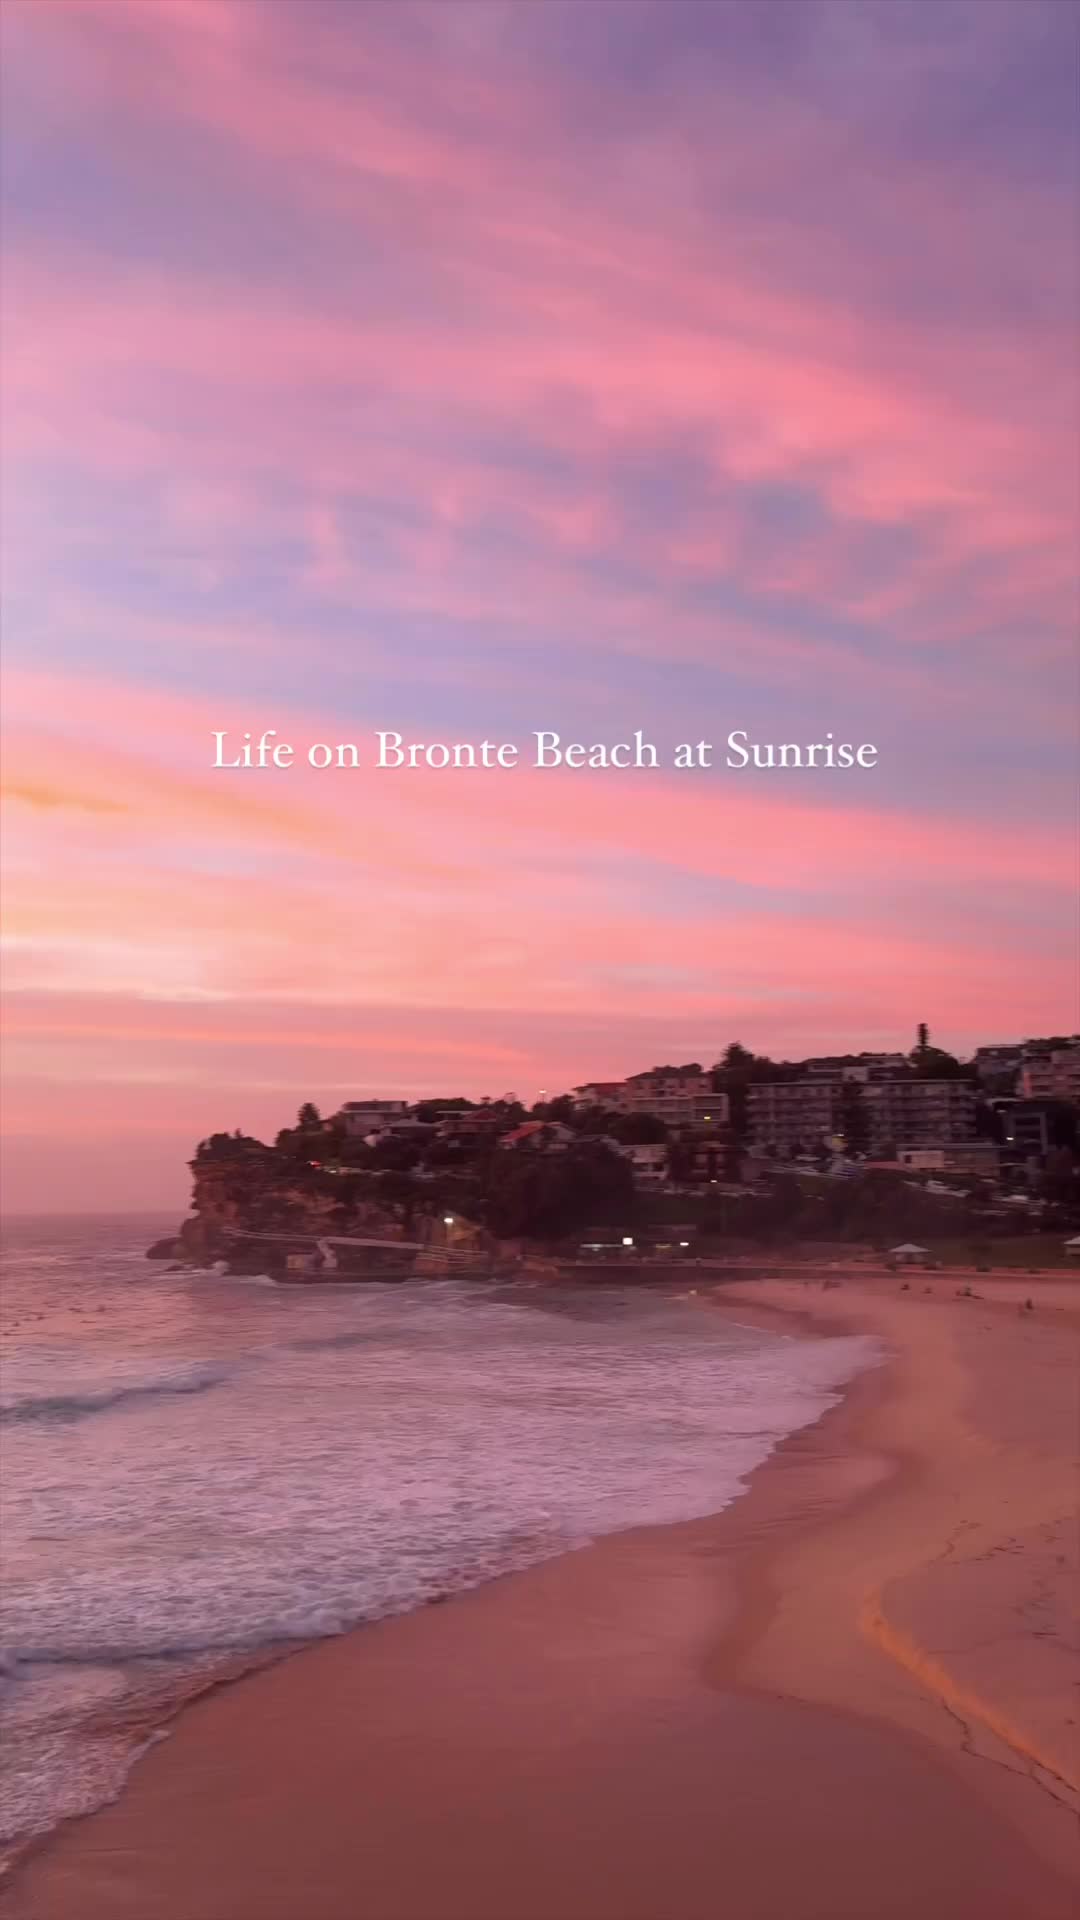 Sunrise at Bronte Beach: A Summer Morning Vibe